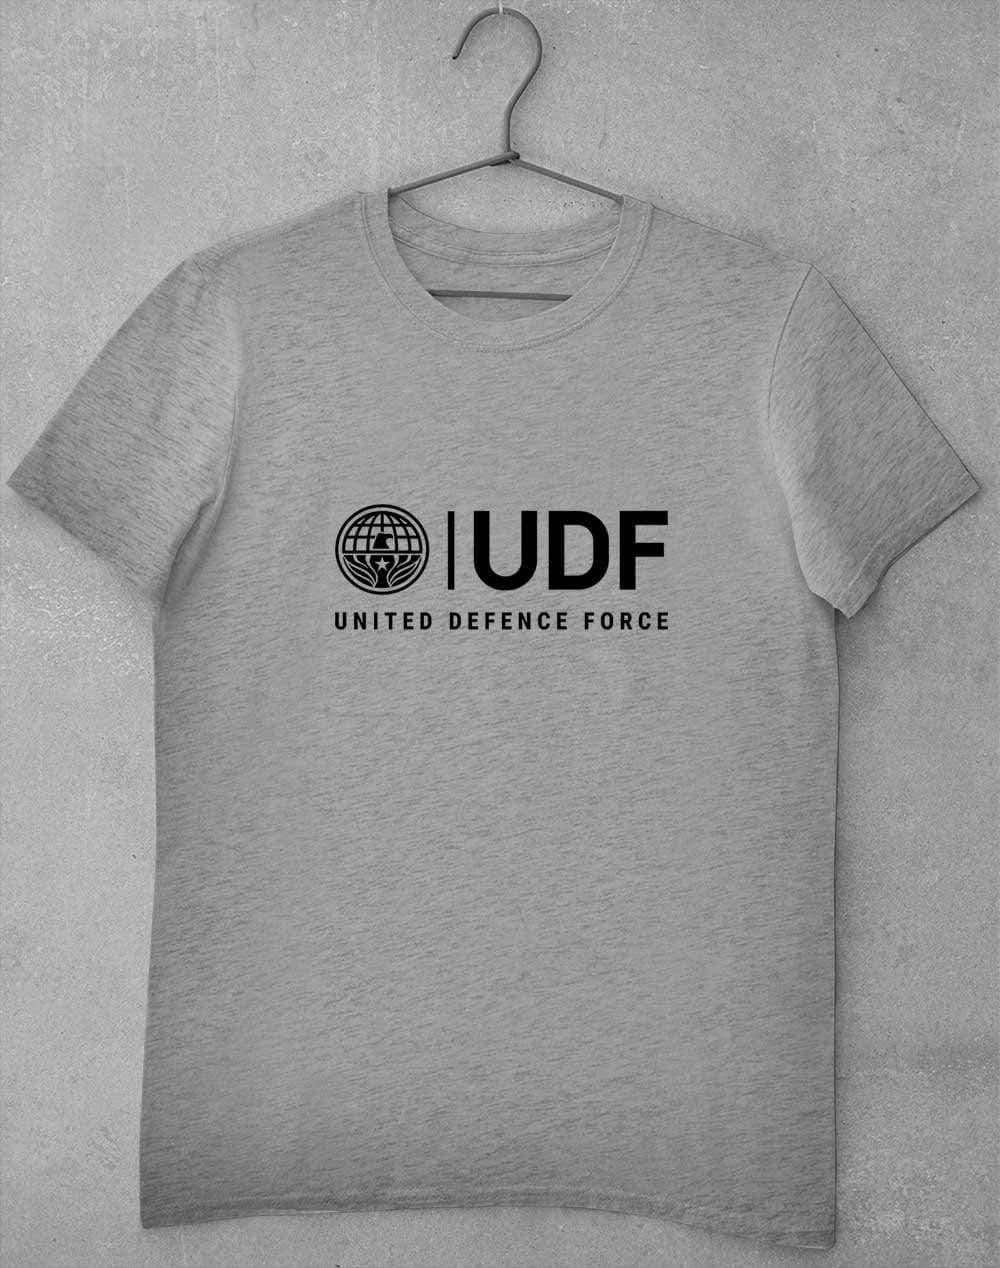 UDF United Defense Force T-Shirt S / Heather Grey  - Off World Tees